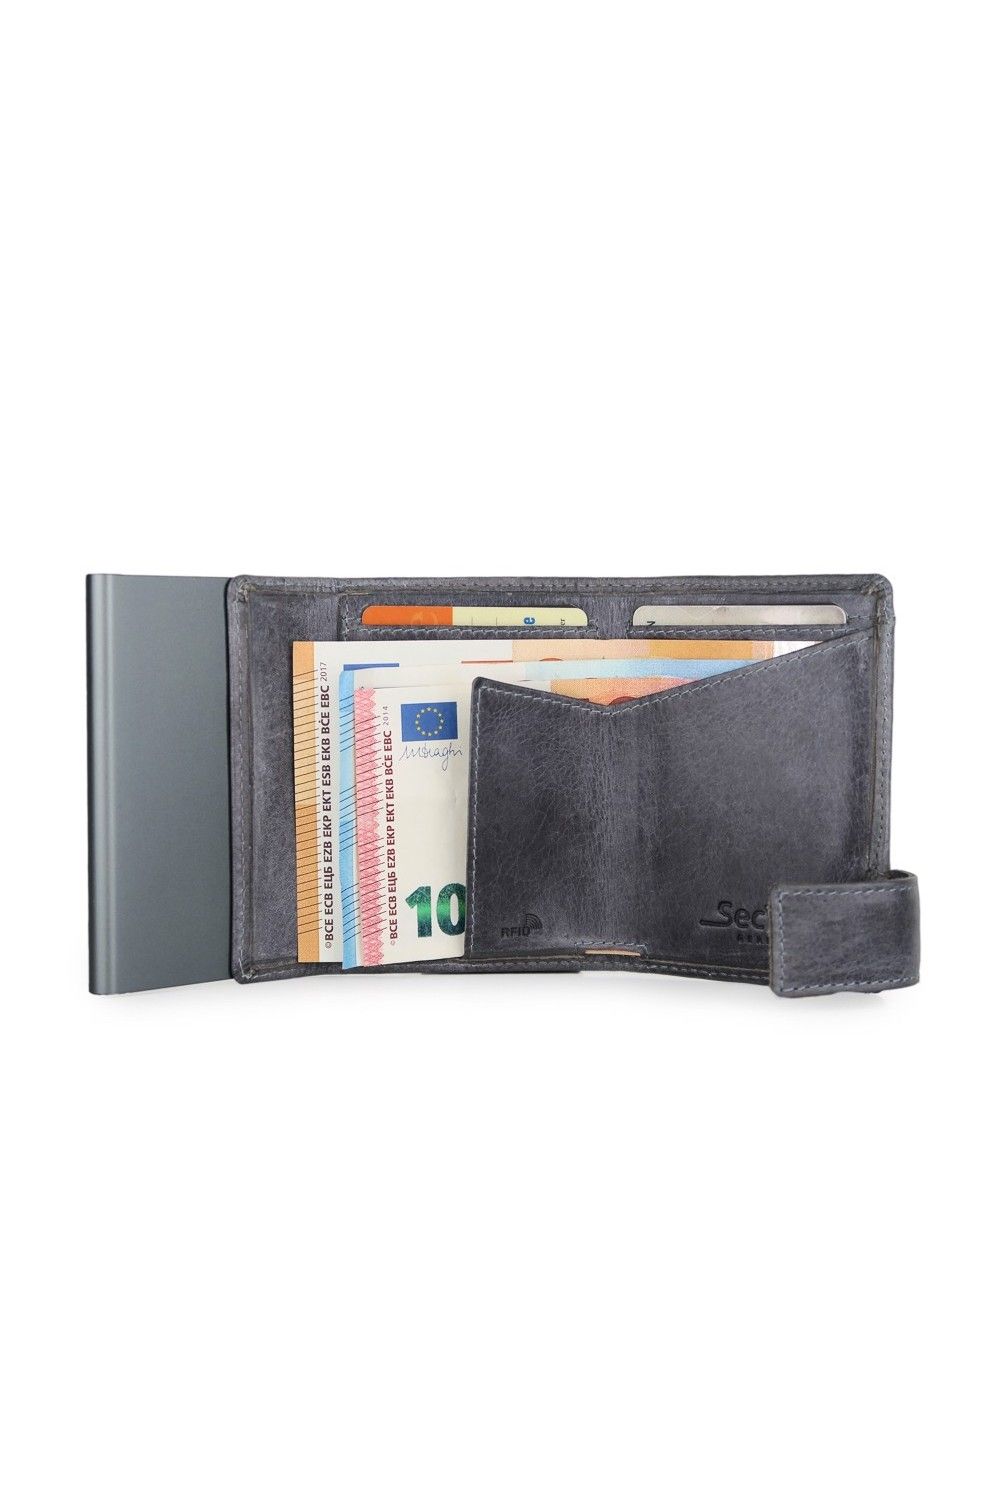 Porte-cartes SecWal DK Leather Vintage Gris